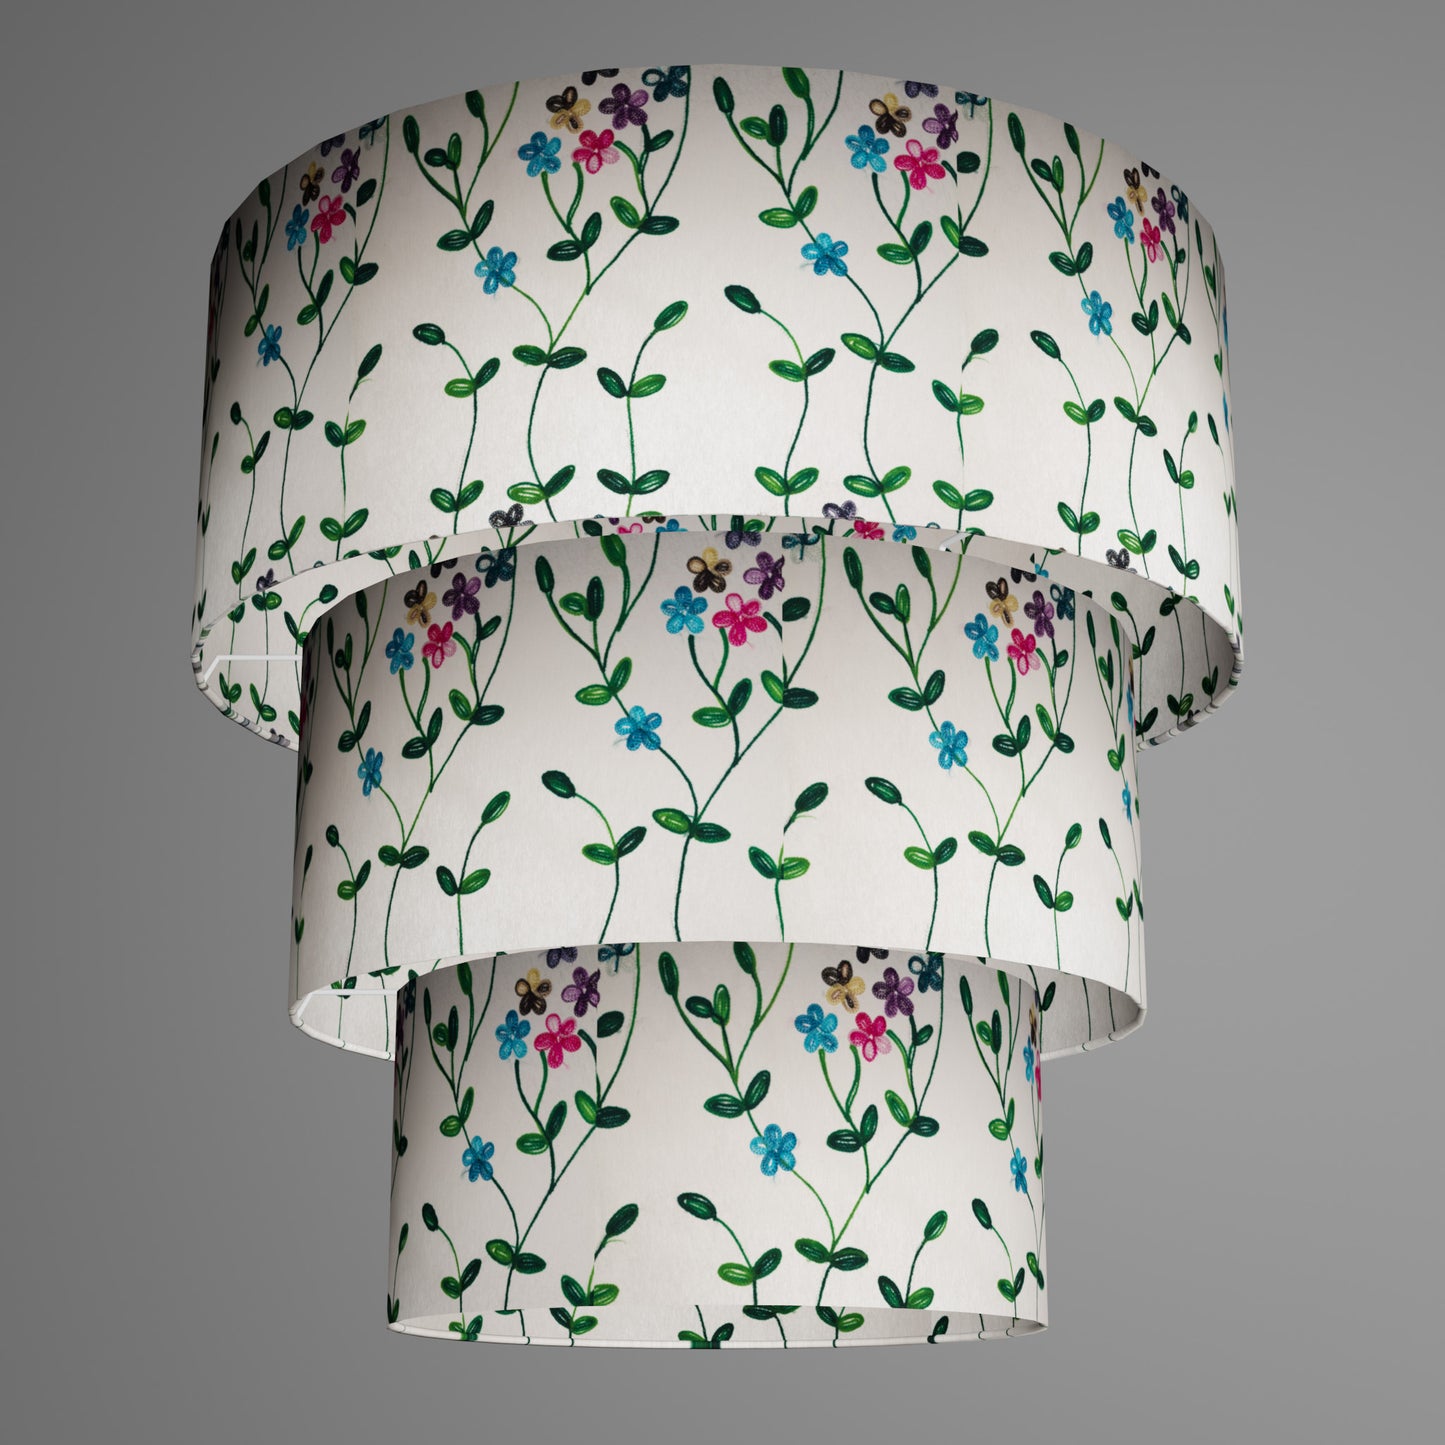 3 Tier Lamp Shade - P43 - Embroidered Flowers on White, 50cm x 20cm, 40cm x 17.5cm & 30cm x 15cm